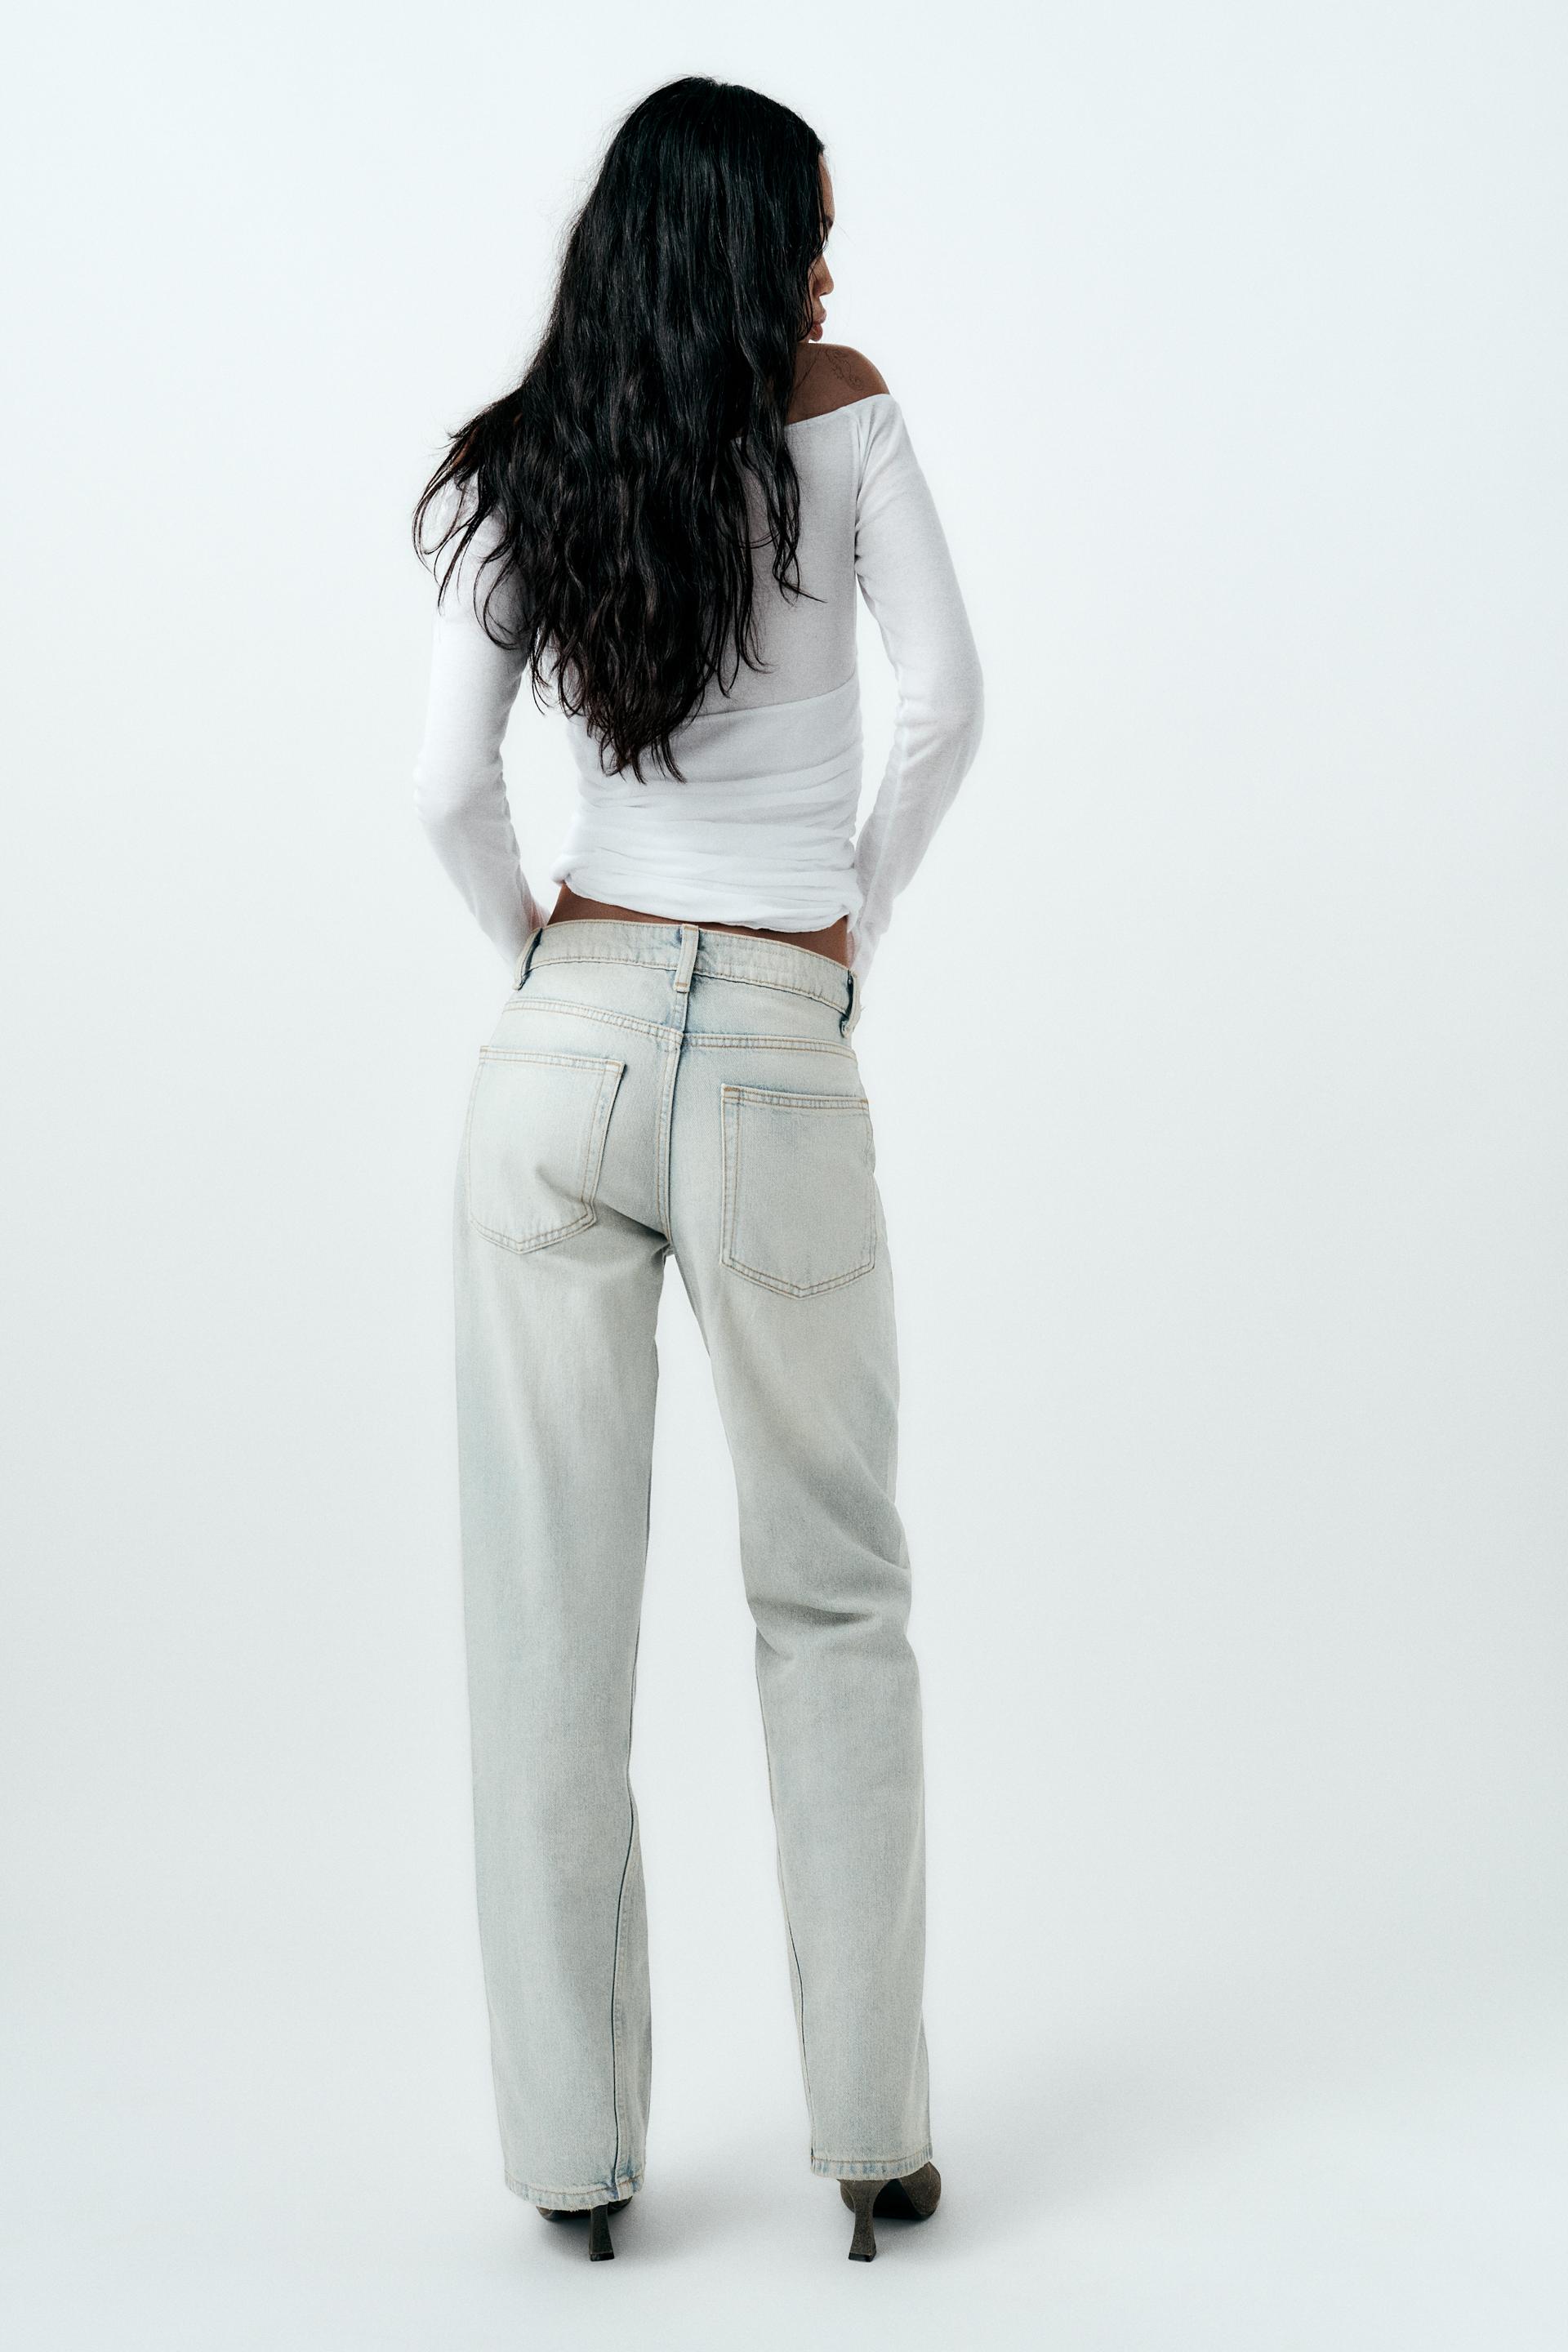 cffvdiz Bootcut Jeans for Women Mid Waist Slim Jeans Stretch Back